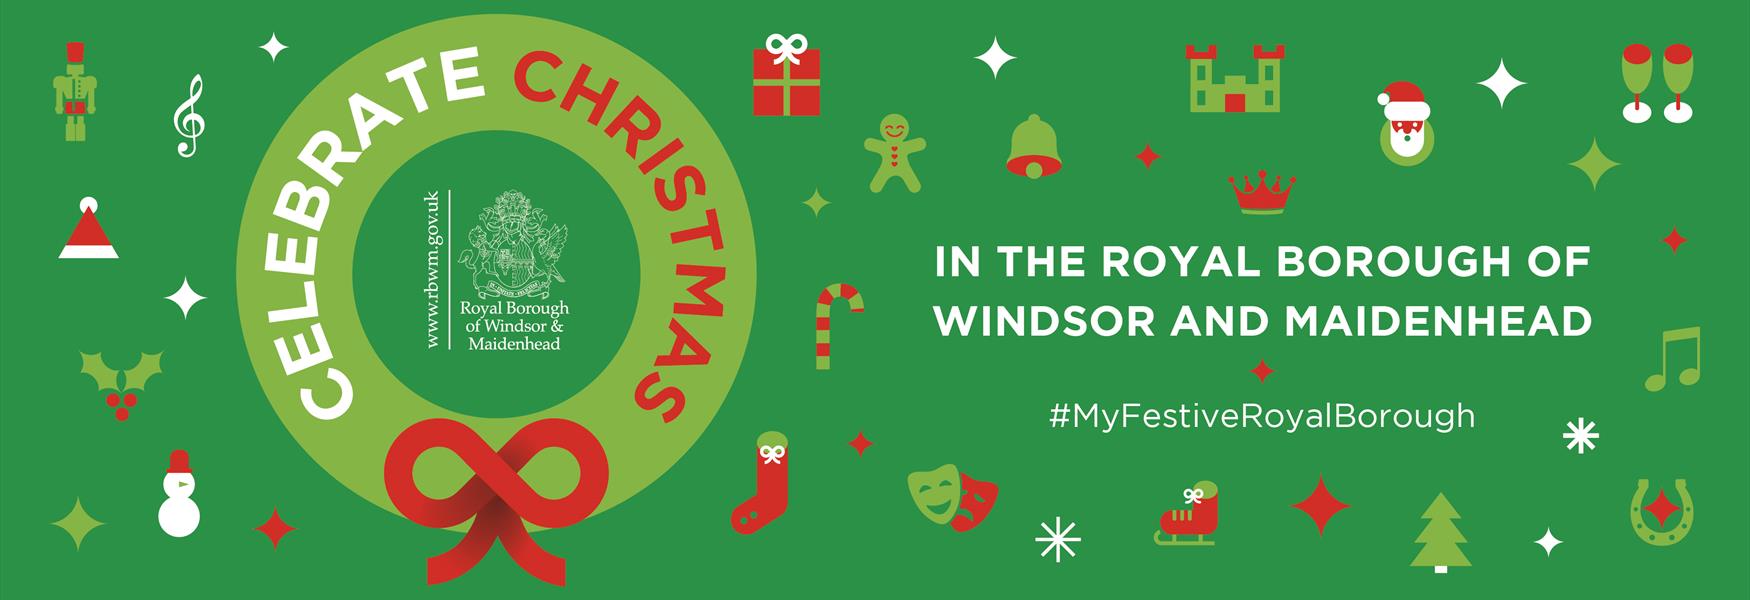 Celebrate Christmas in the Royal Borough of Windsor & Maidenhead